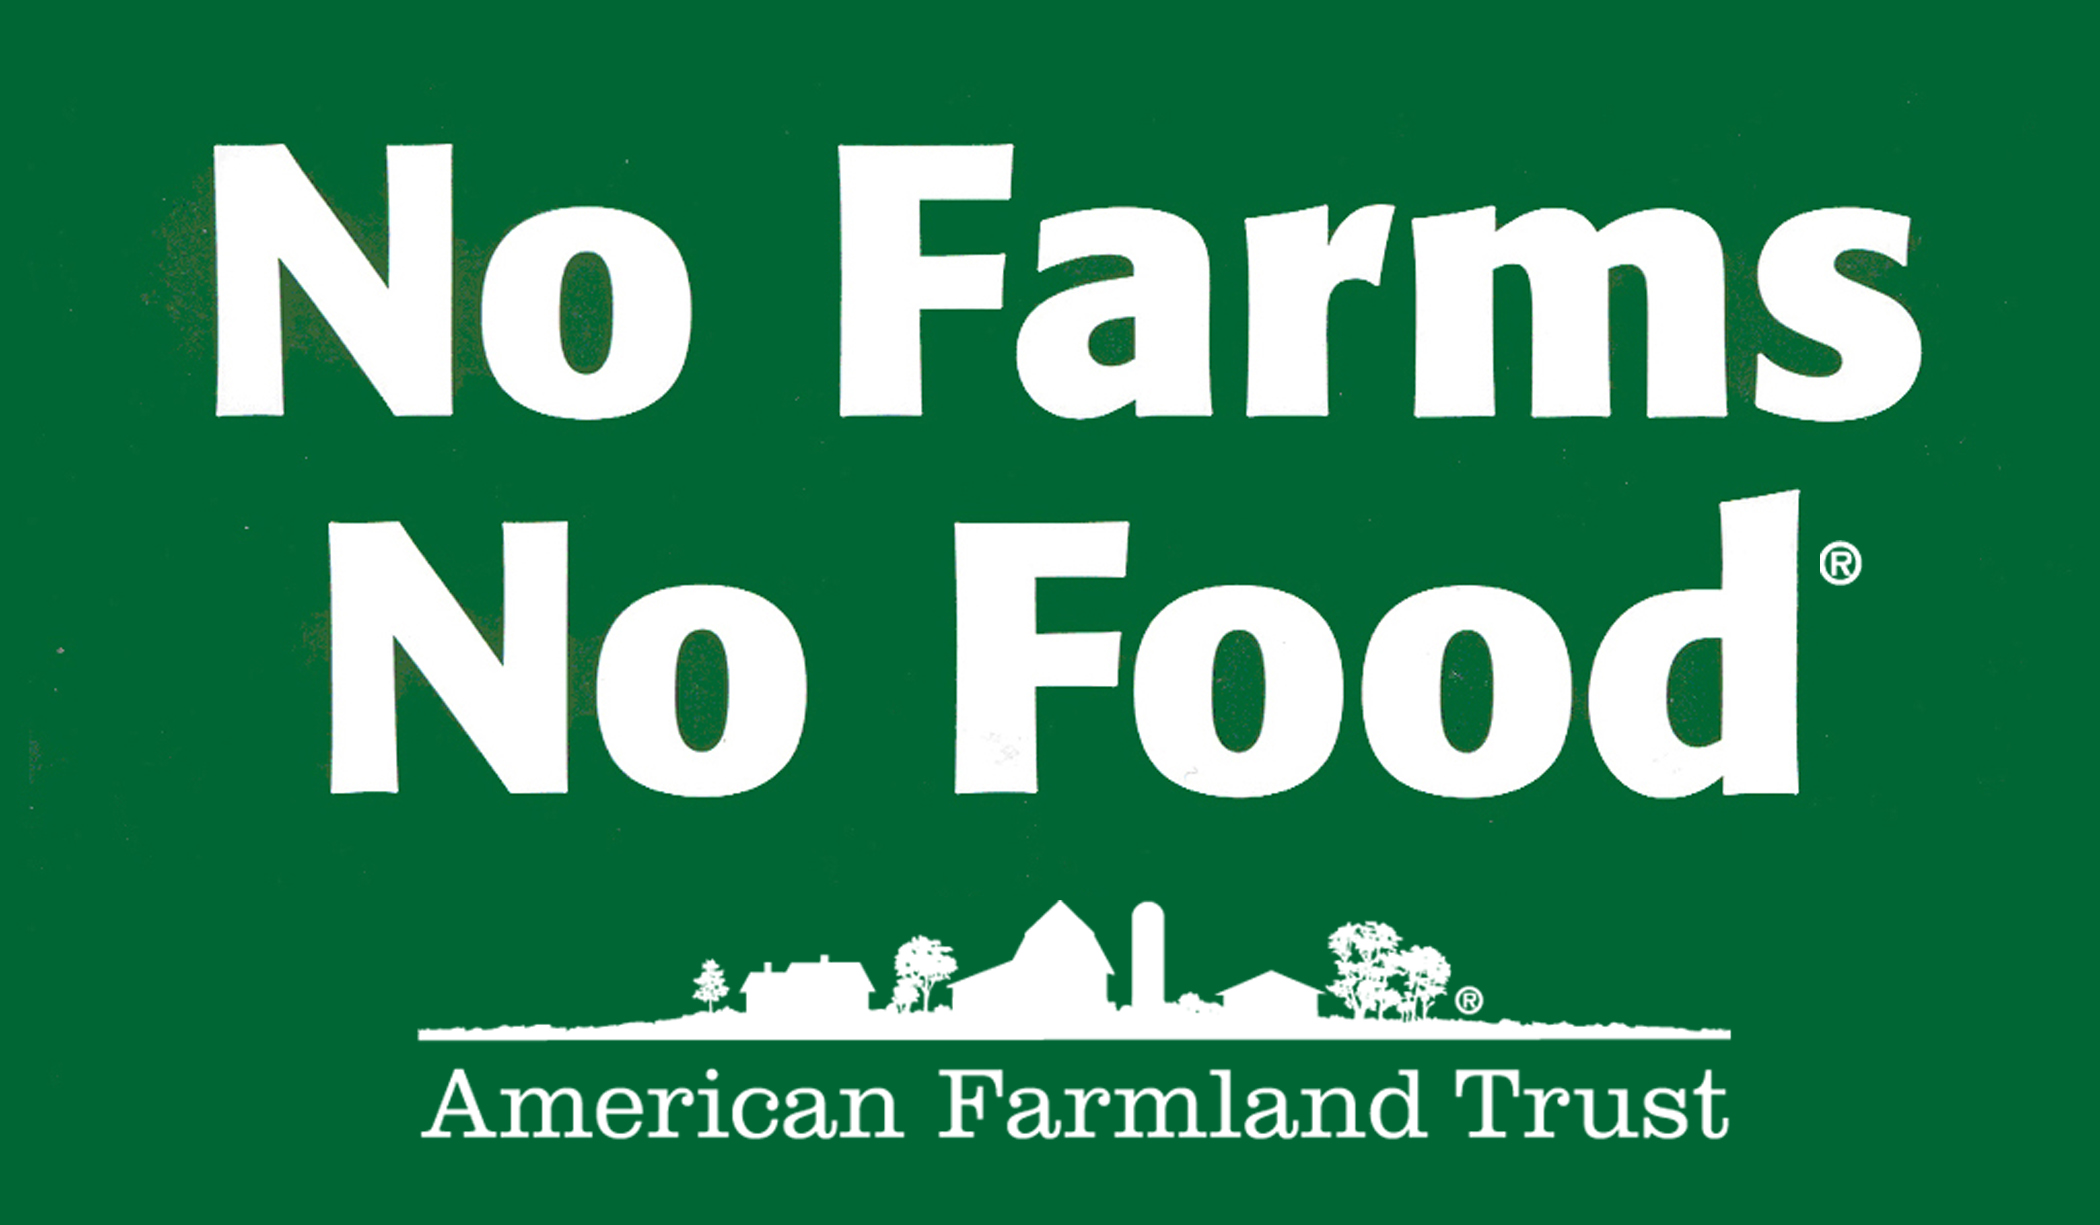 Free No Farms No Food Bumper Stickers